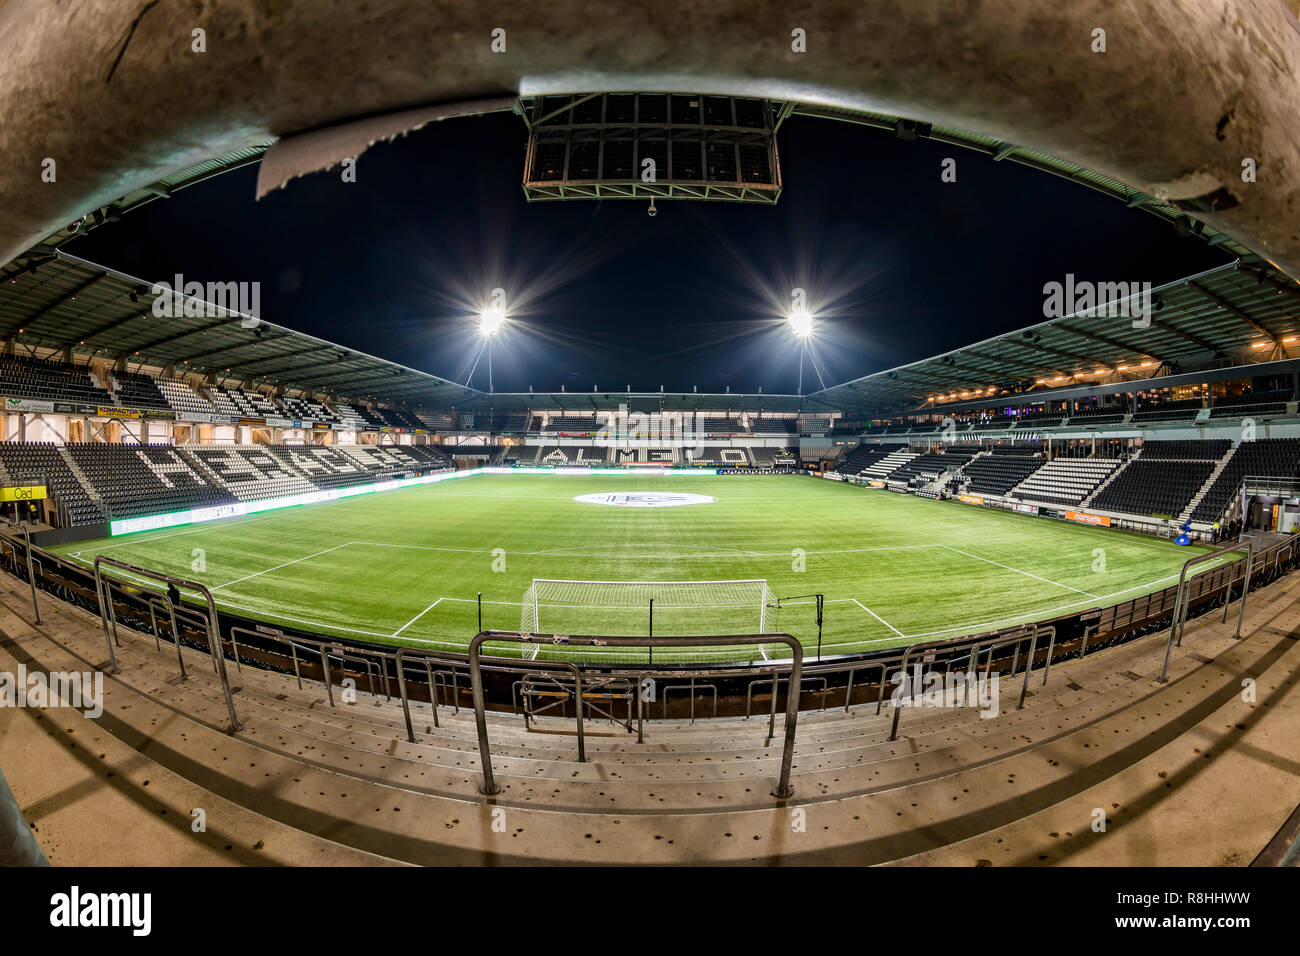 ALMELO, Netherlands, 15-12-2018, football, Polman Stadium, Dutch eredivisie, season 2018/2019, stadium overview, before the match Heracles - PSV, Stock Photo